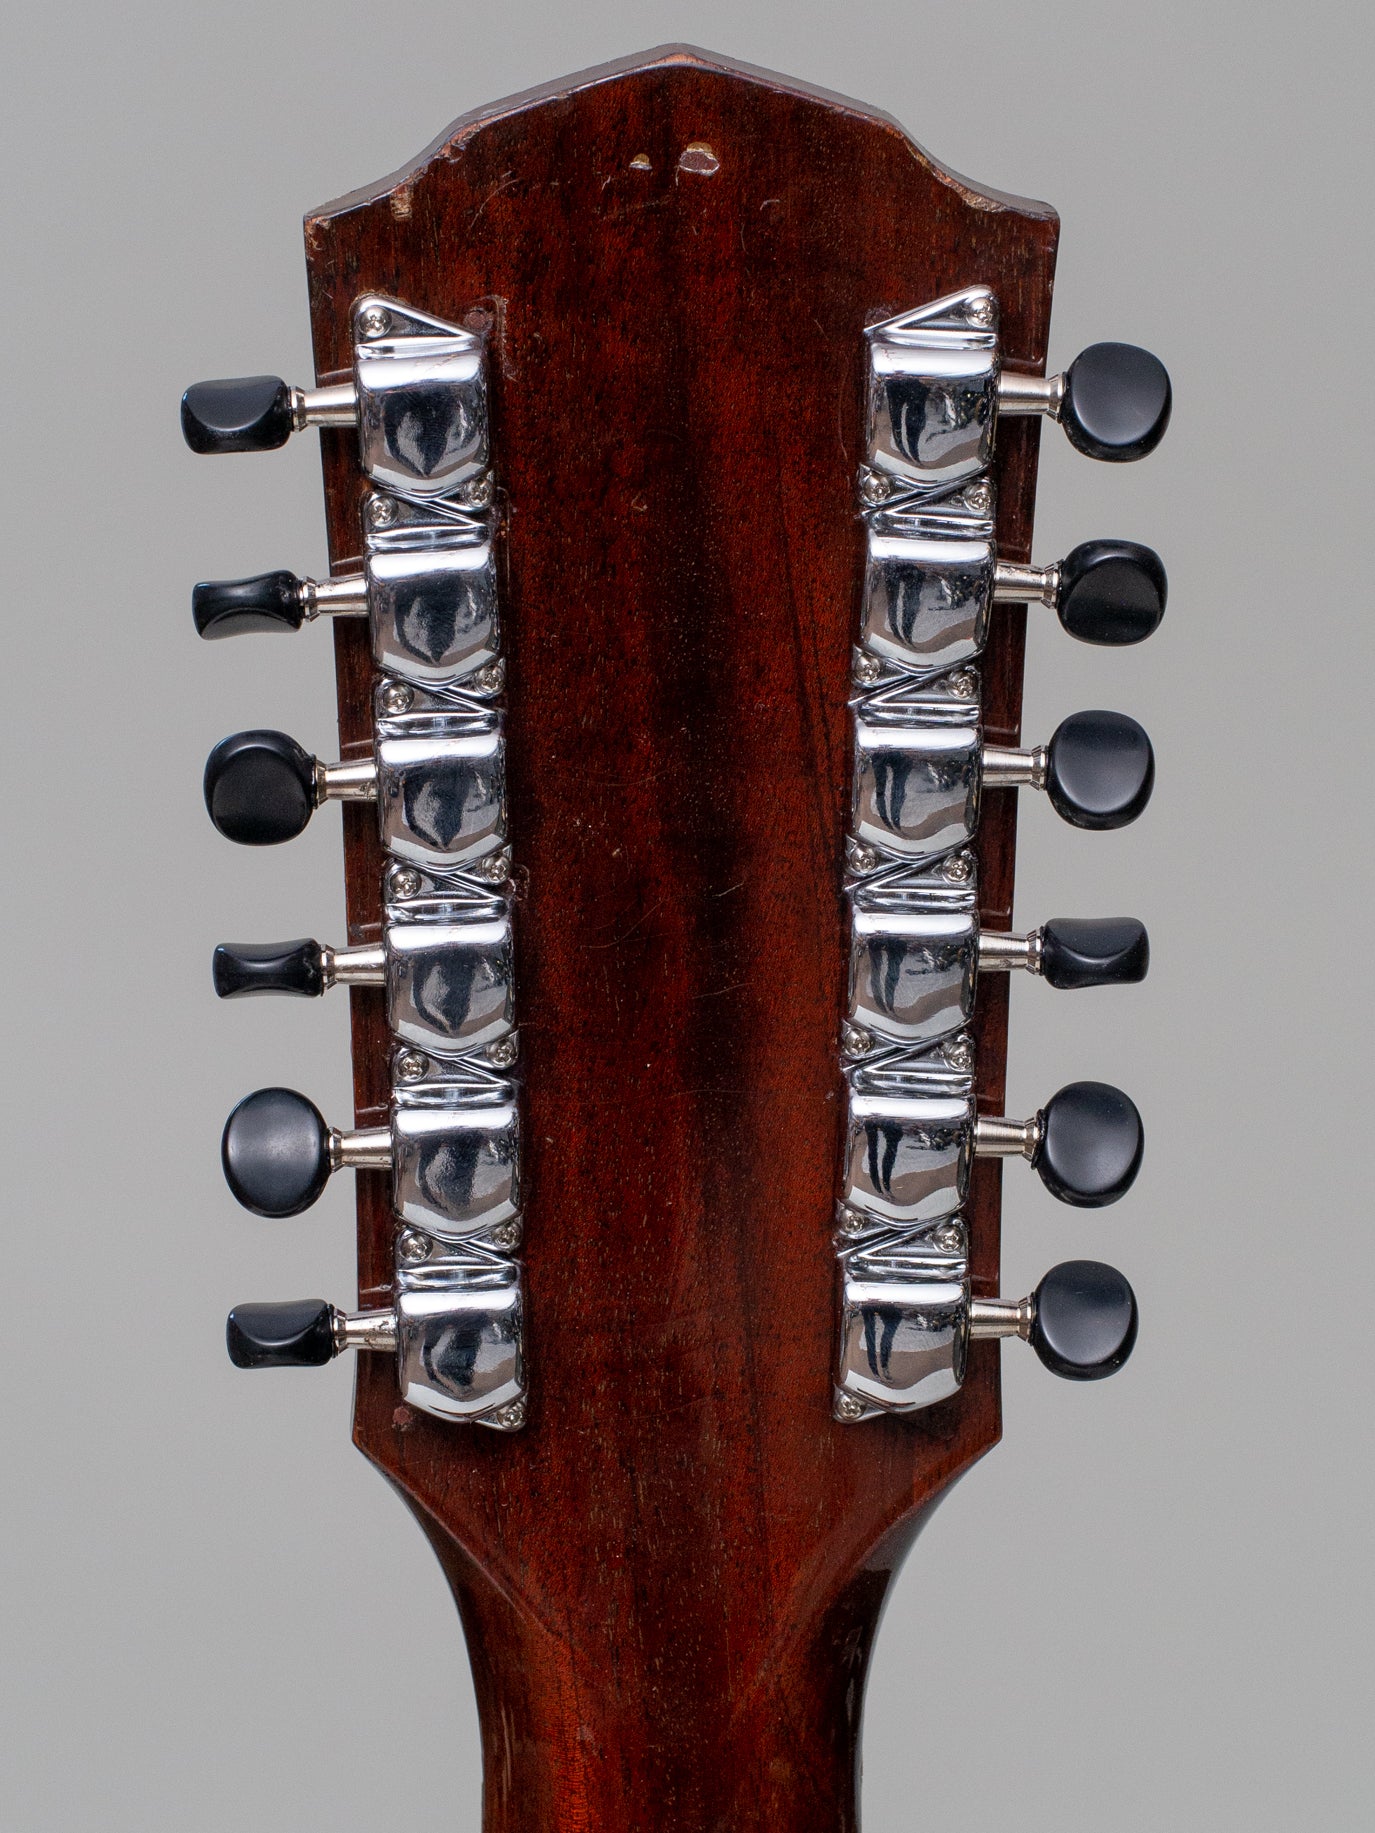 1970 Fender F-1070 12-String